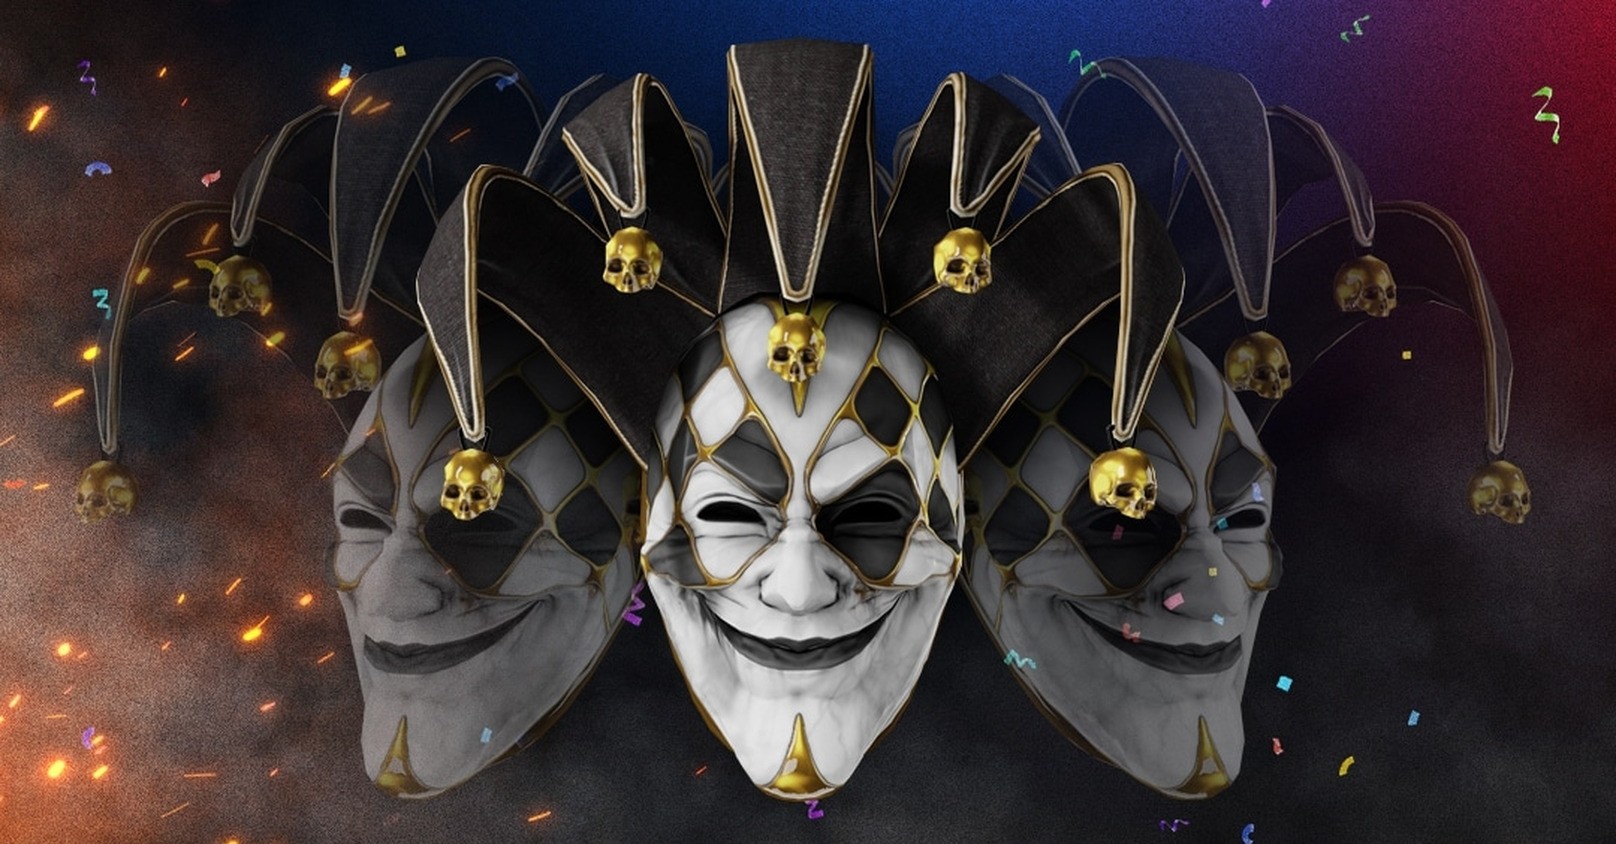 PAYDAY 2 - 10th Anniversary Jester Mask DLC Steam CD Key 1.44 $